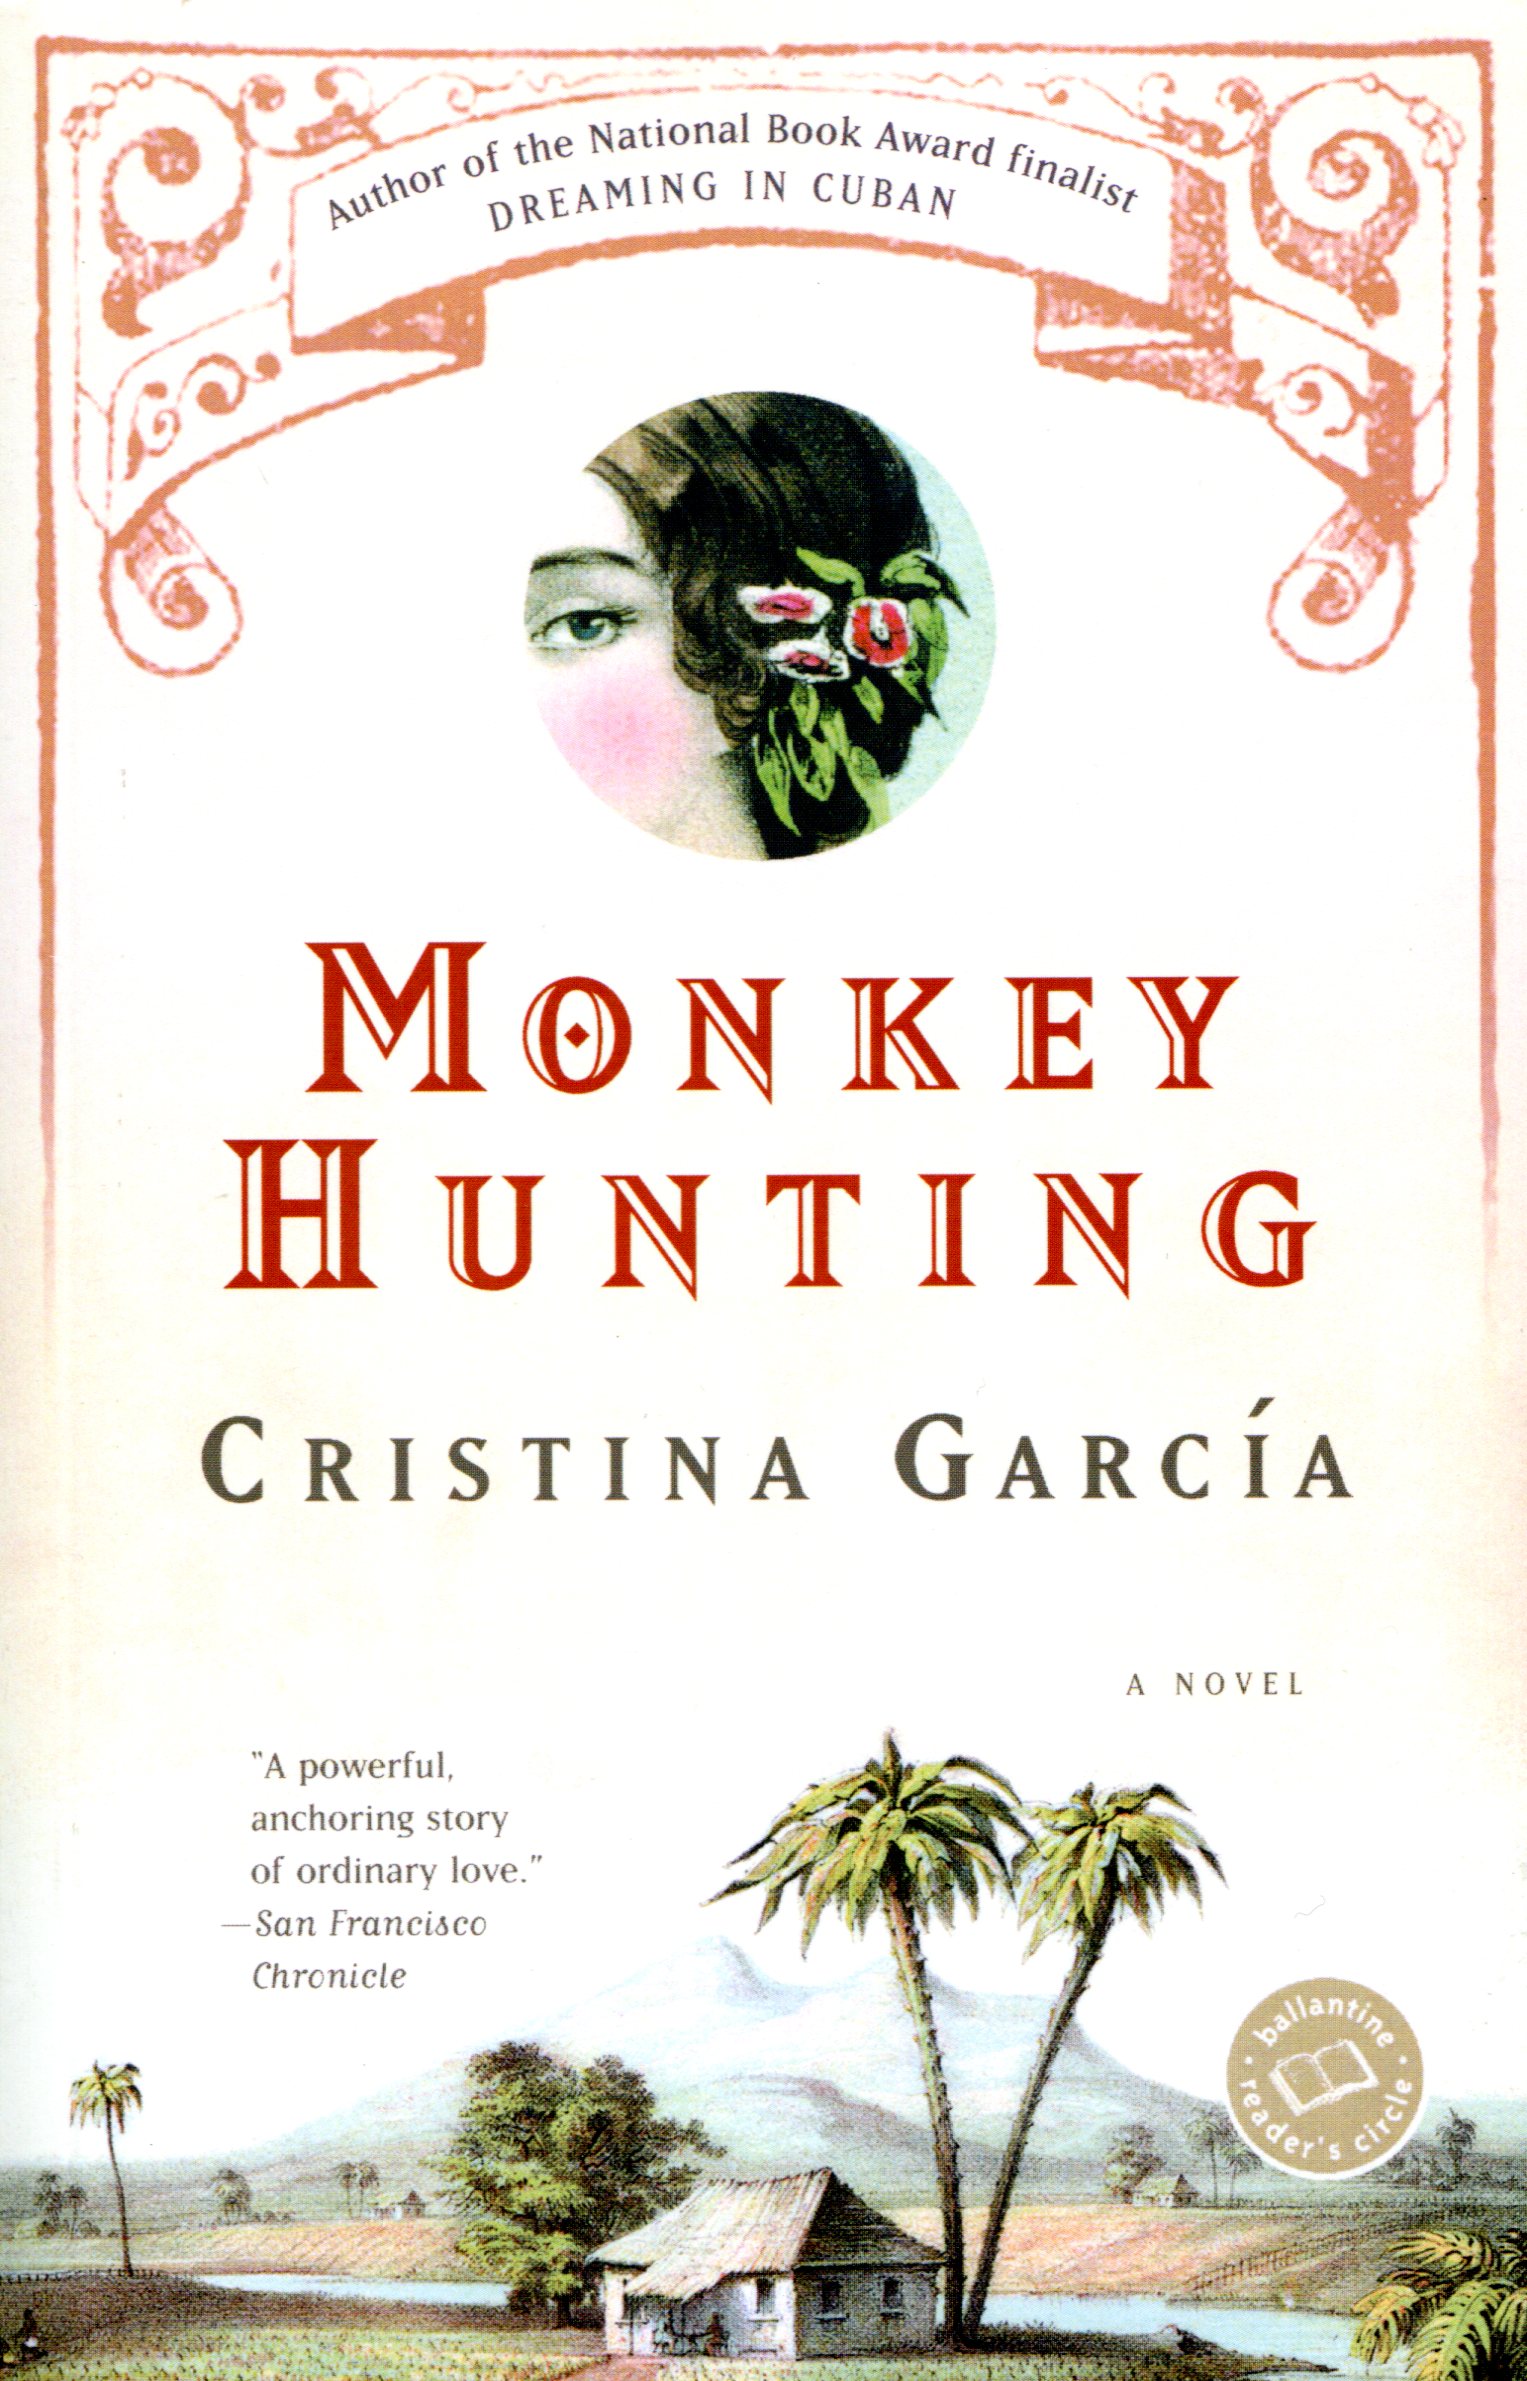 Monkey Hunting by Cristina Garcia